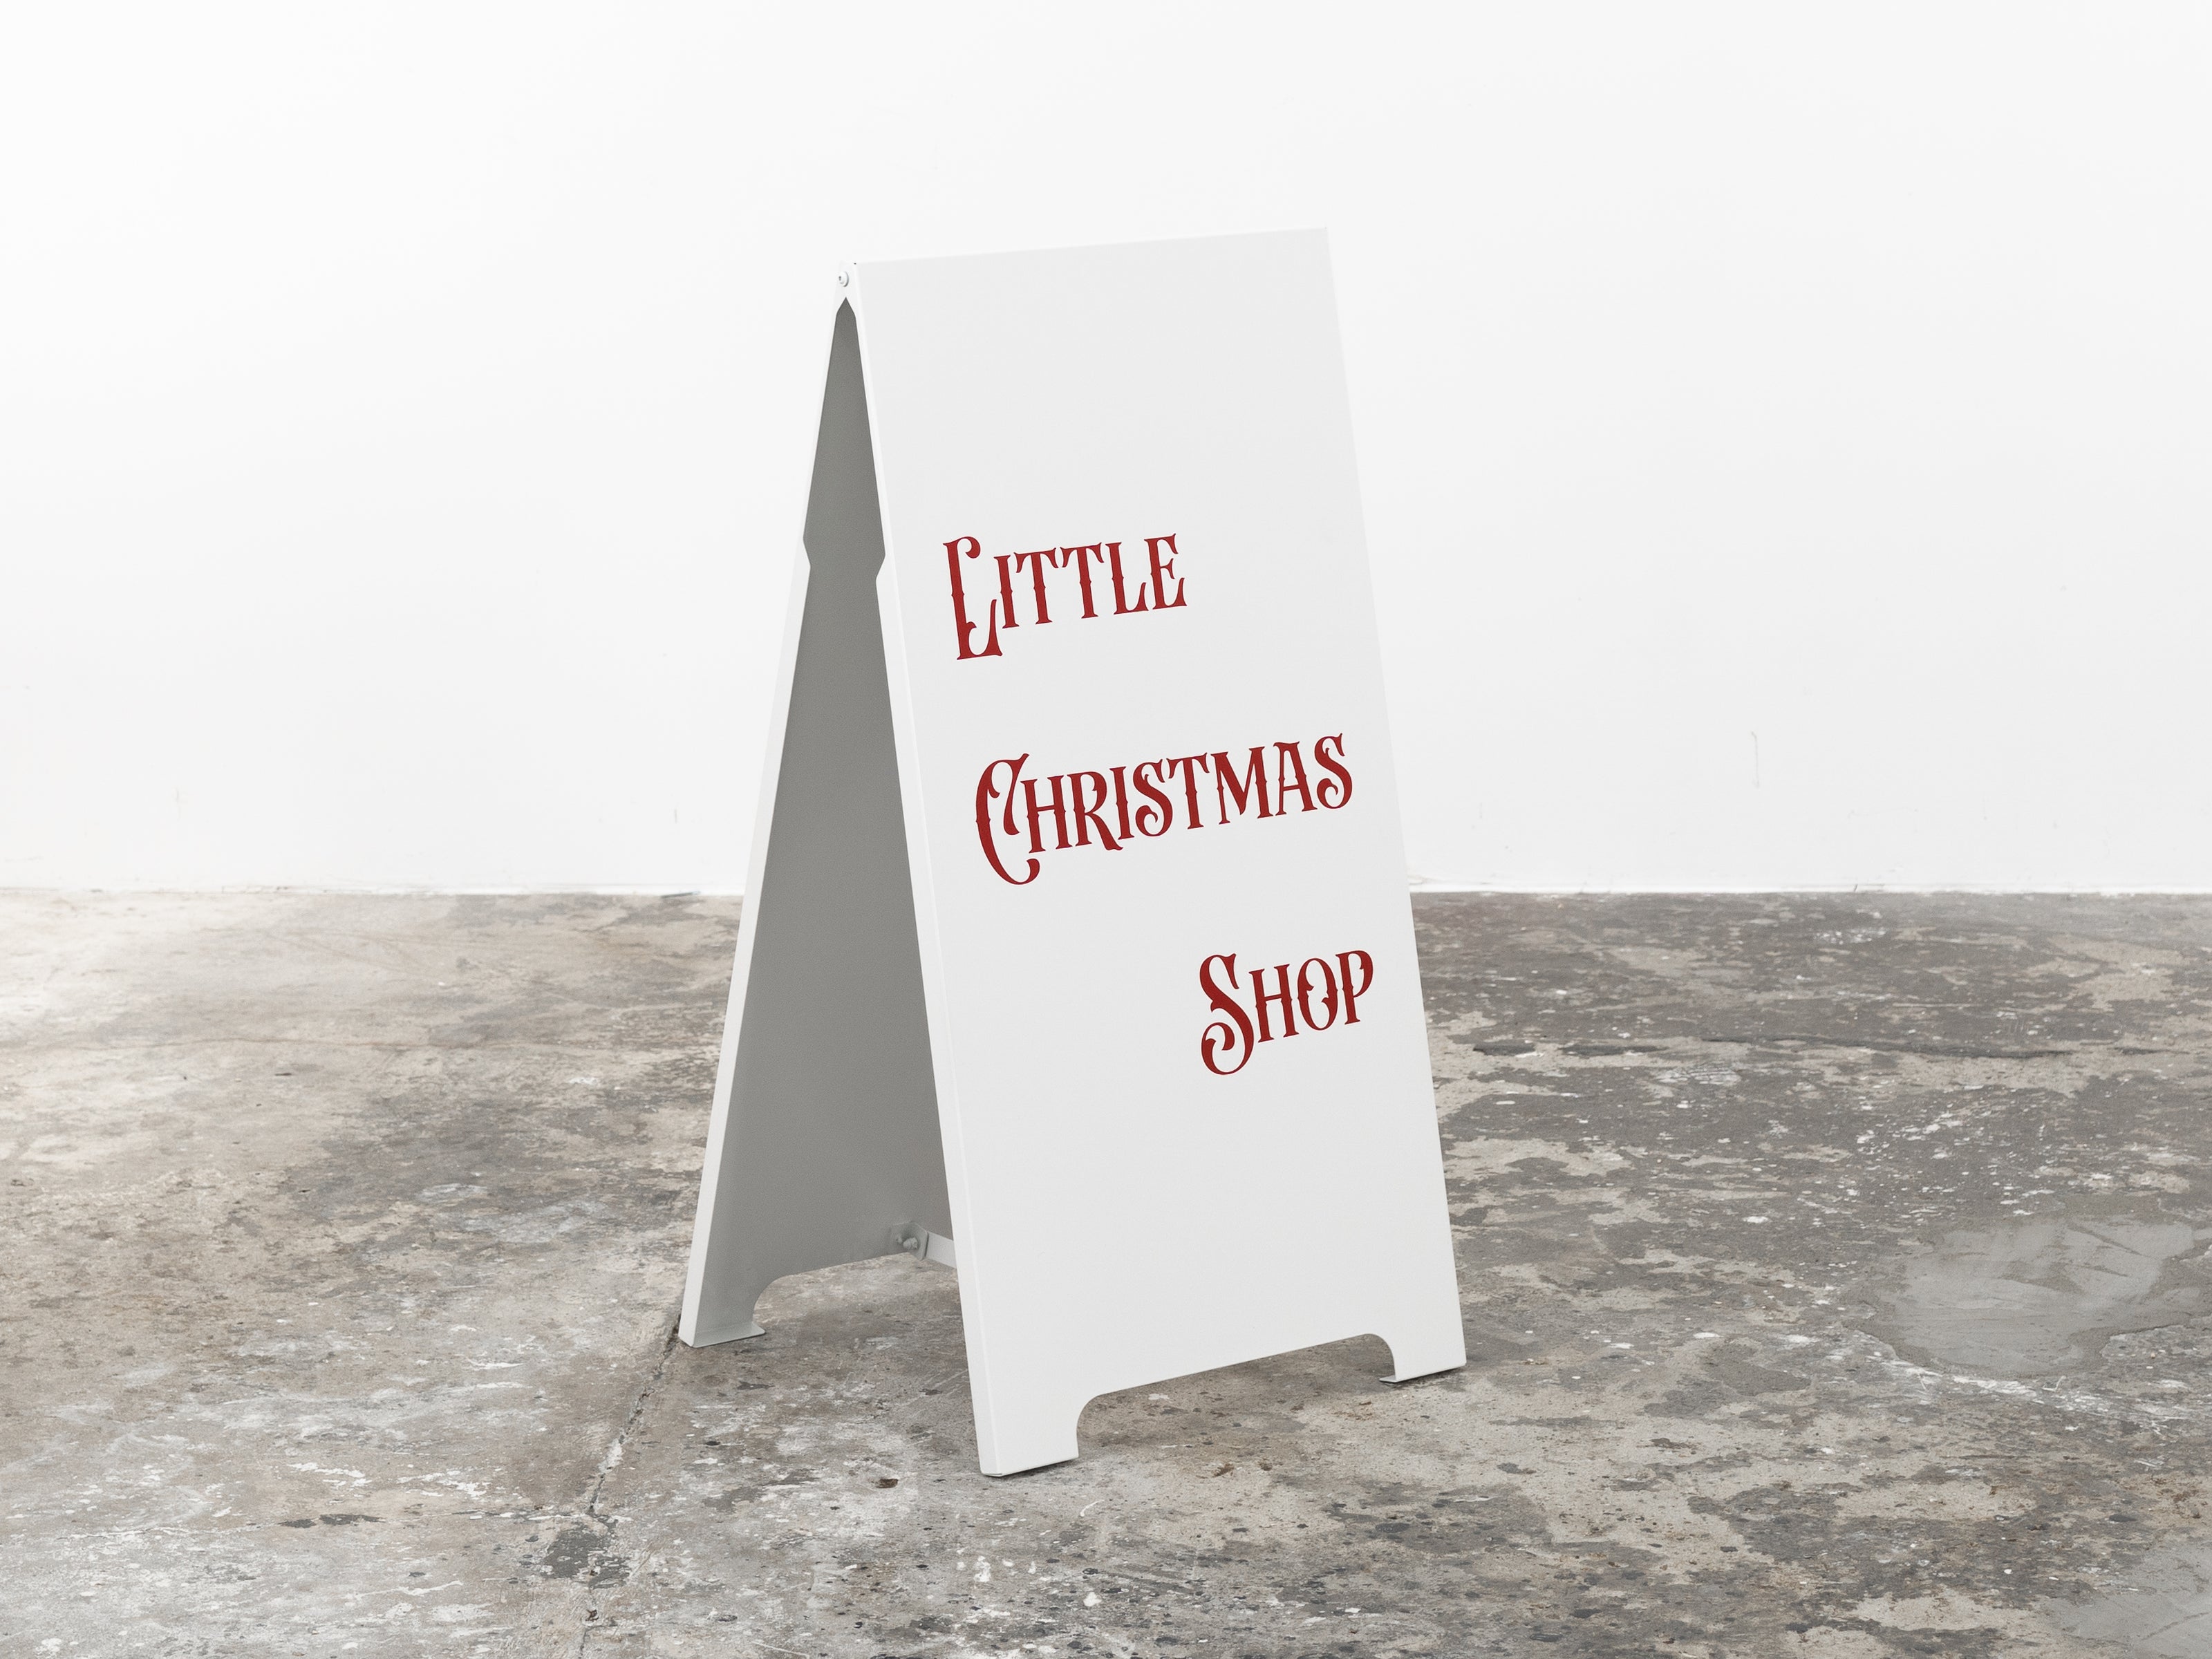 Little Christmas Shop sandwich board sign by Milimetry